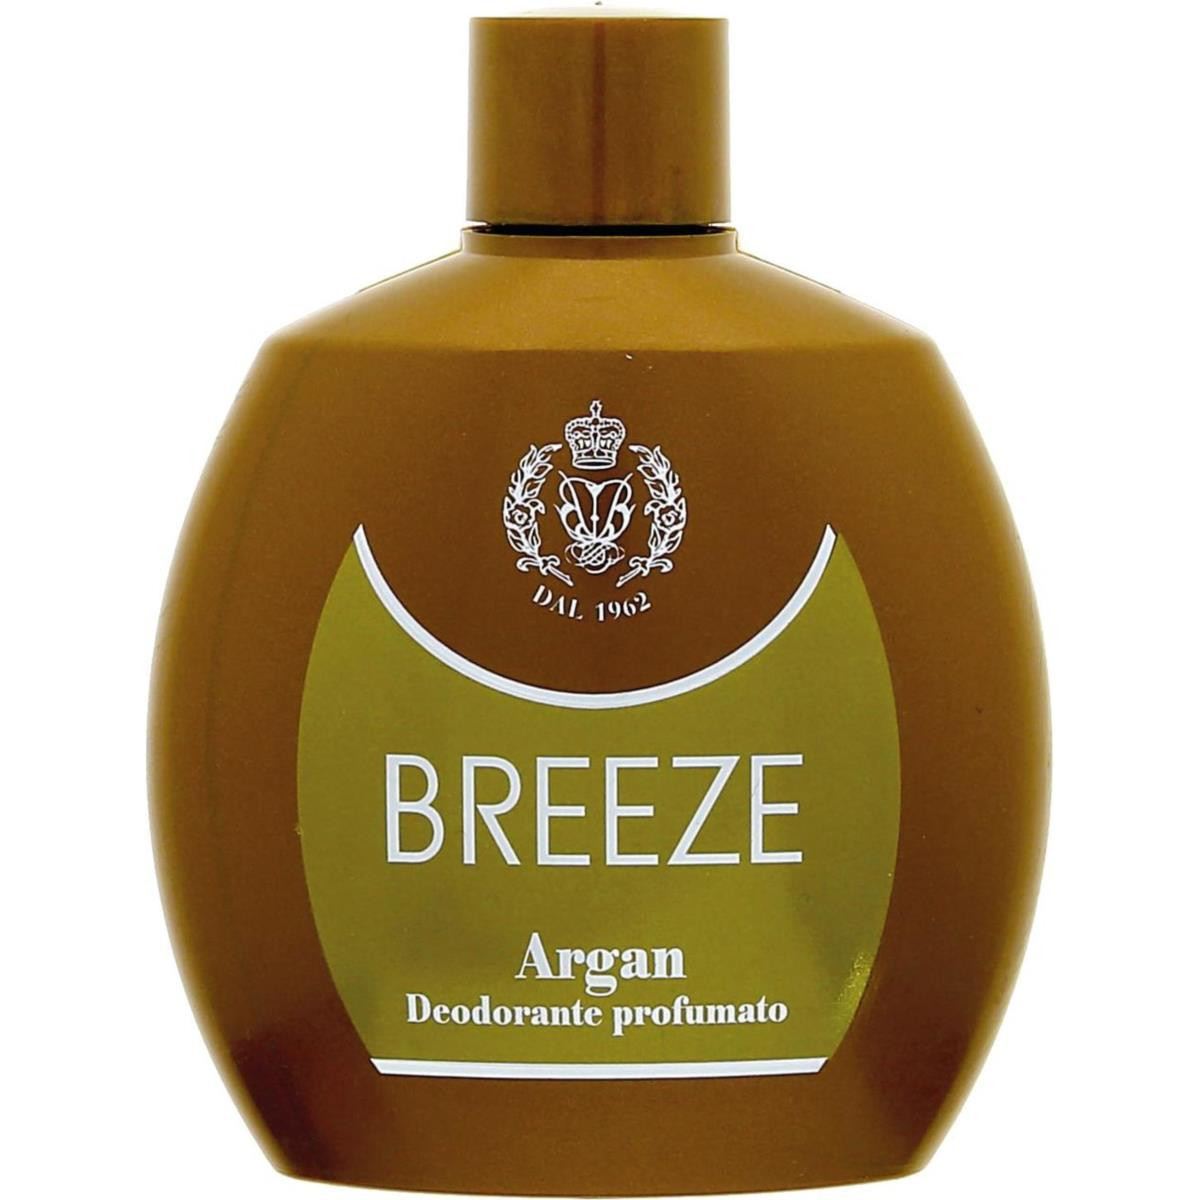 Deodorante Breeze Argan ml 100